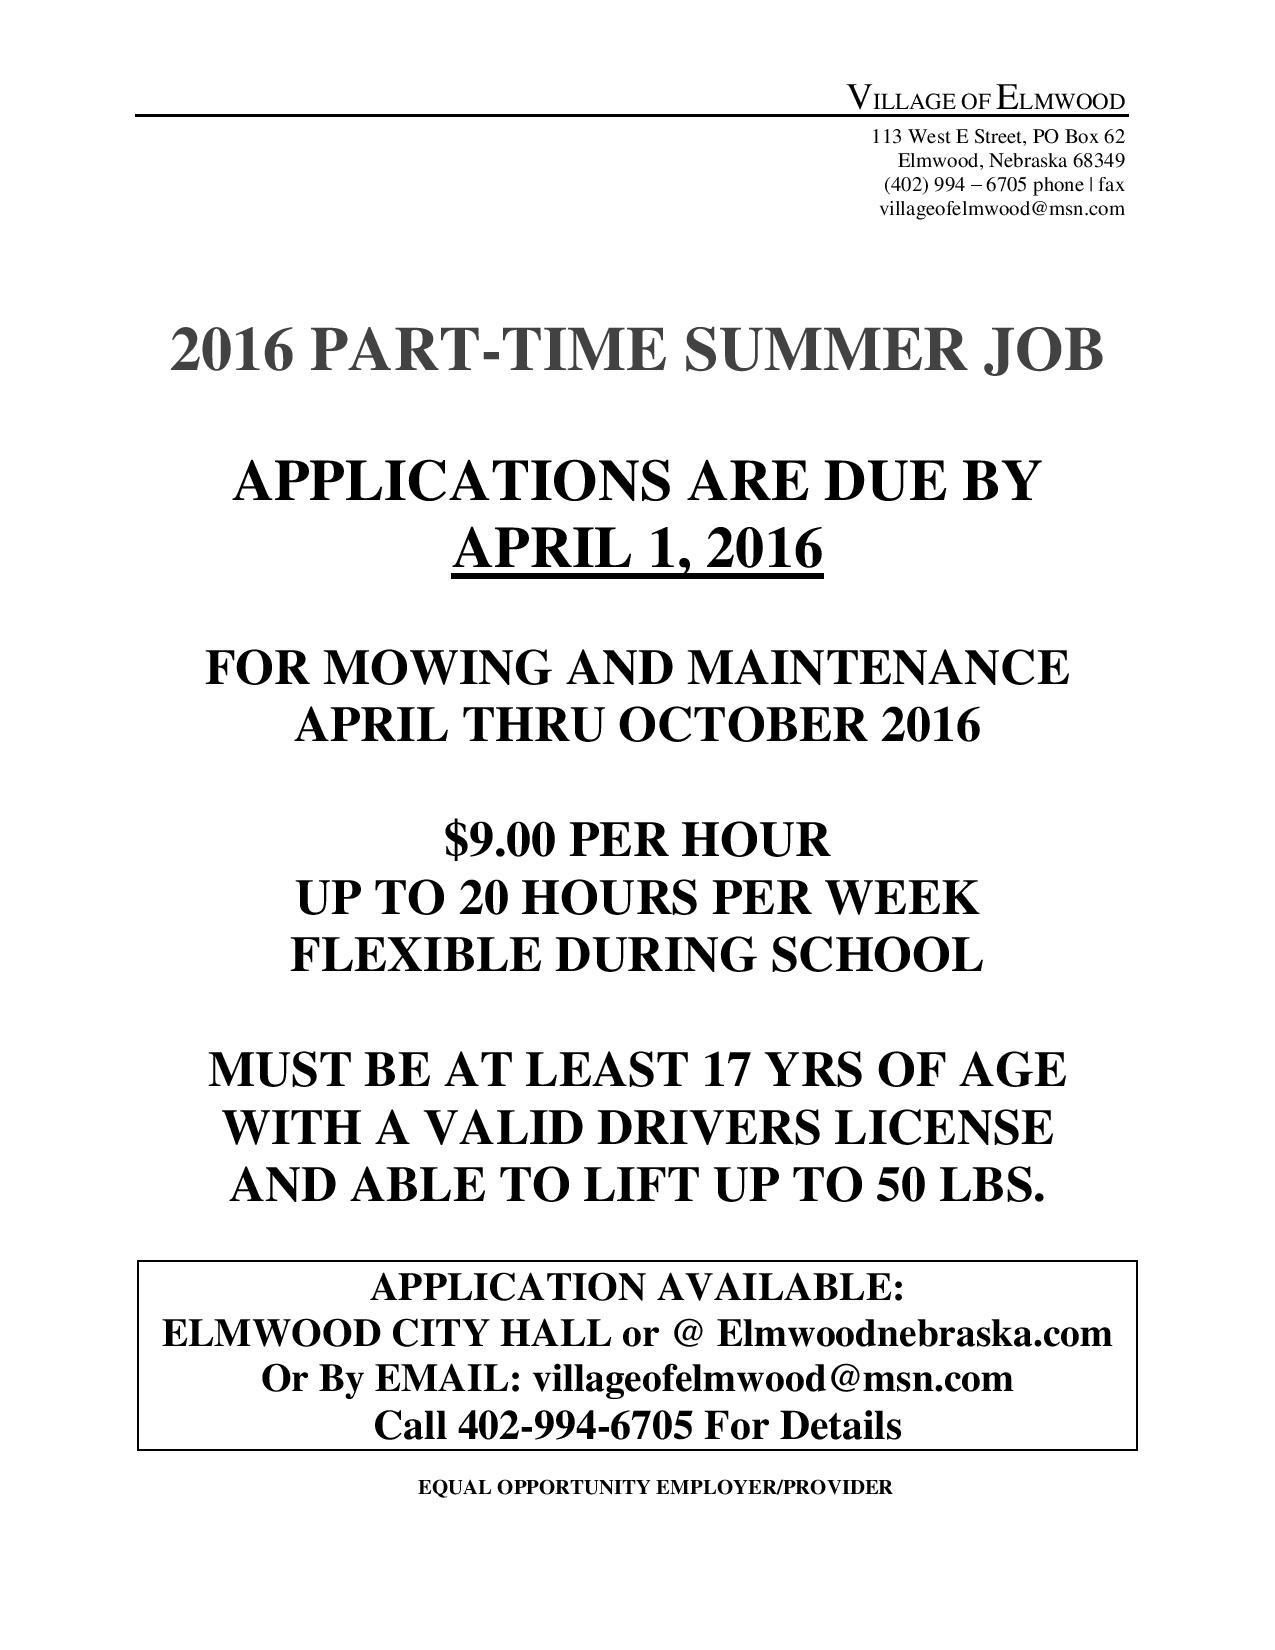 2016 Summer Job Notice page 001